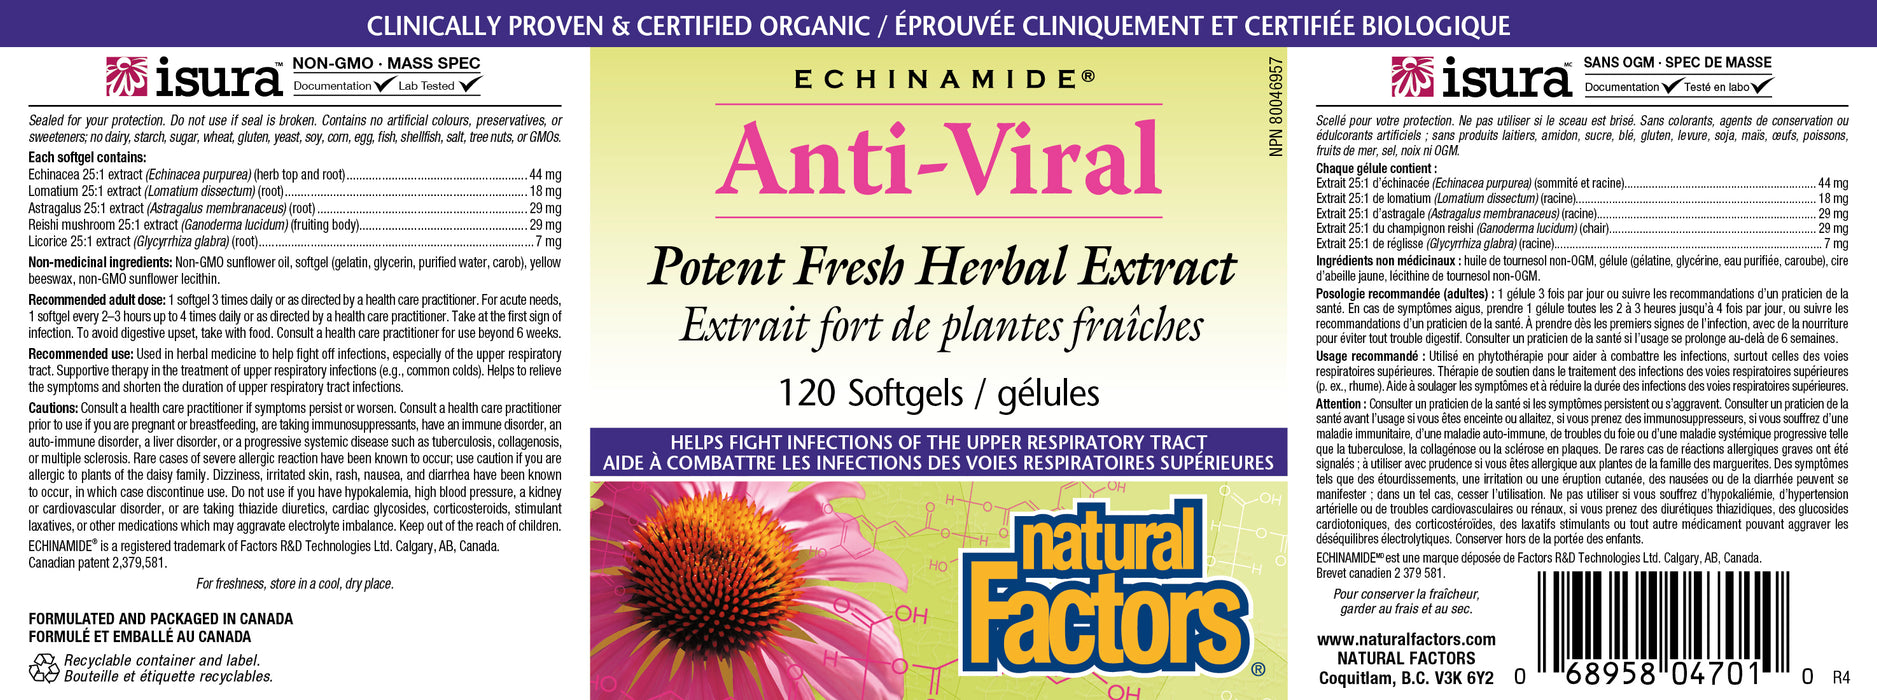 Natural Factors Echinamide Anti-Viral Potent Fresh Herbal Extract 120 Gelatin Softgels